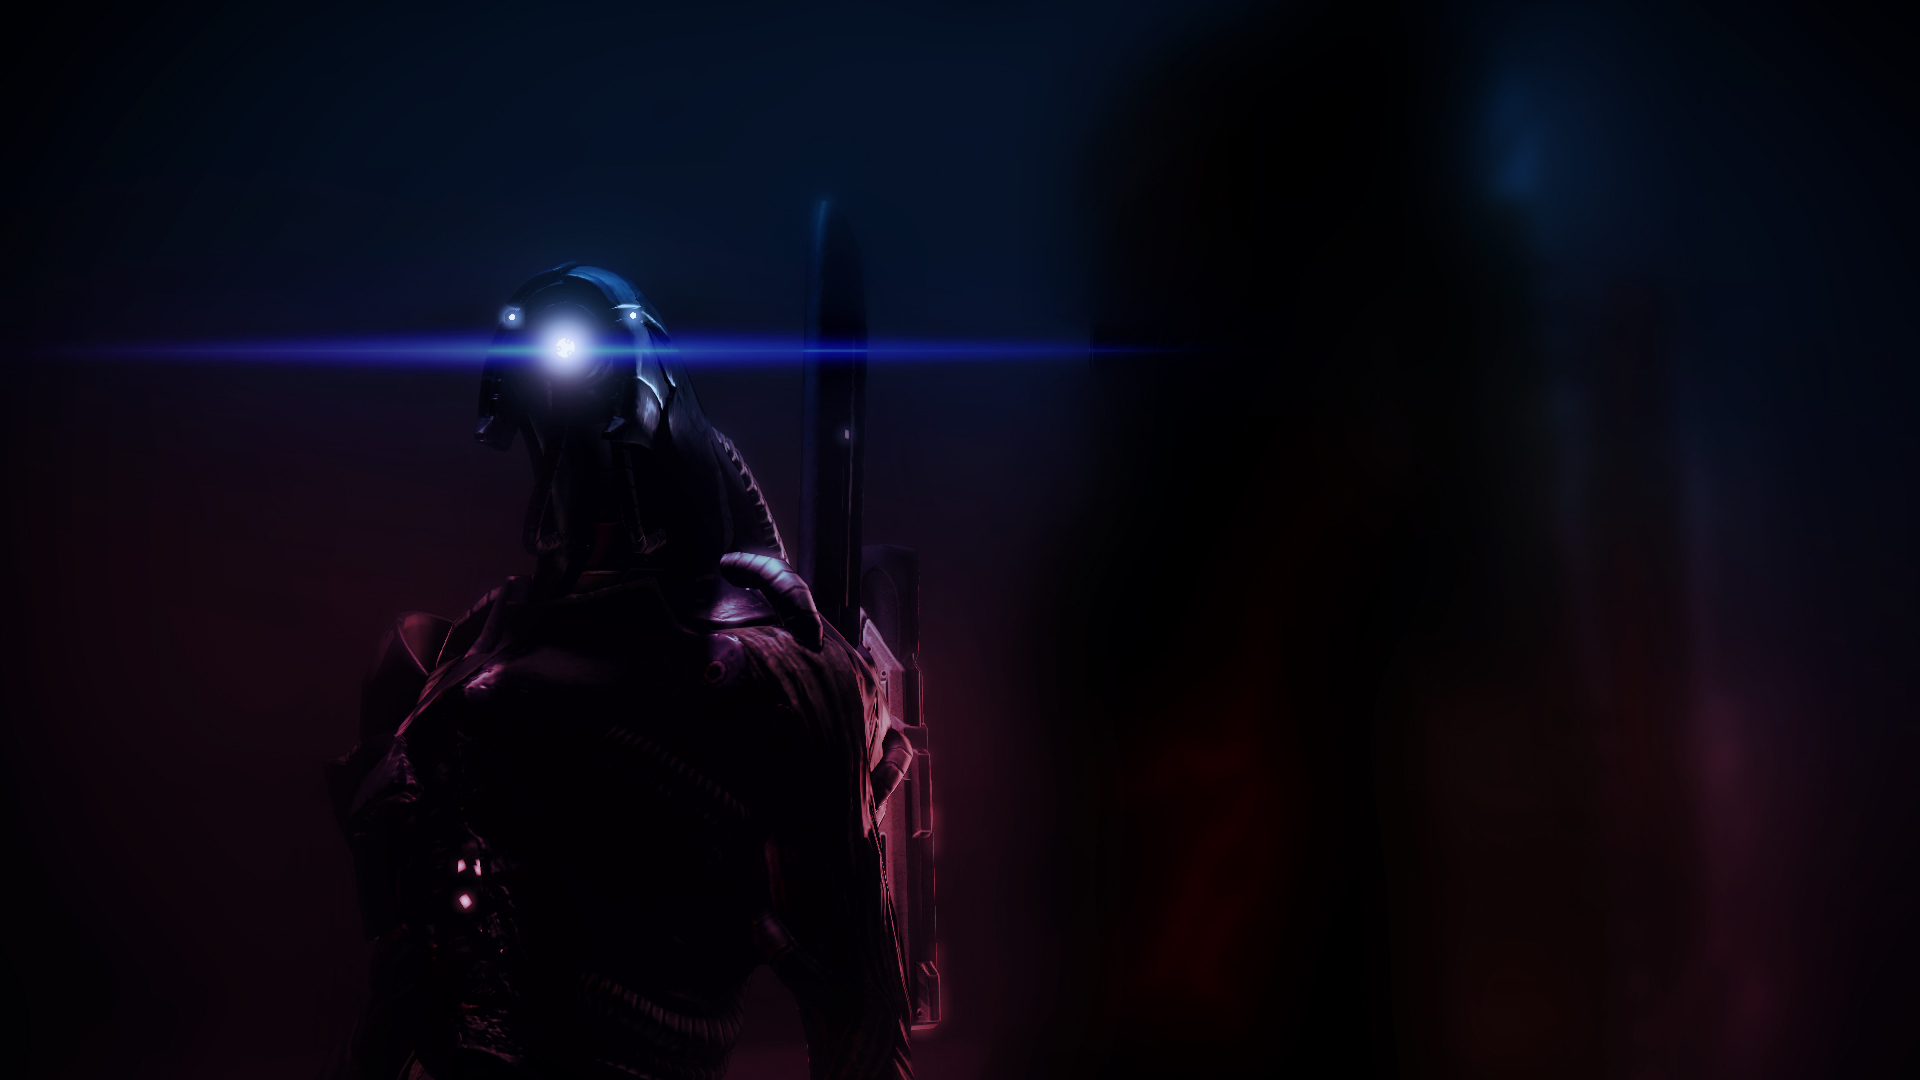 Legion Mass Effect 1920x1080